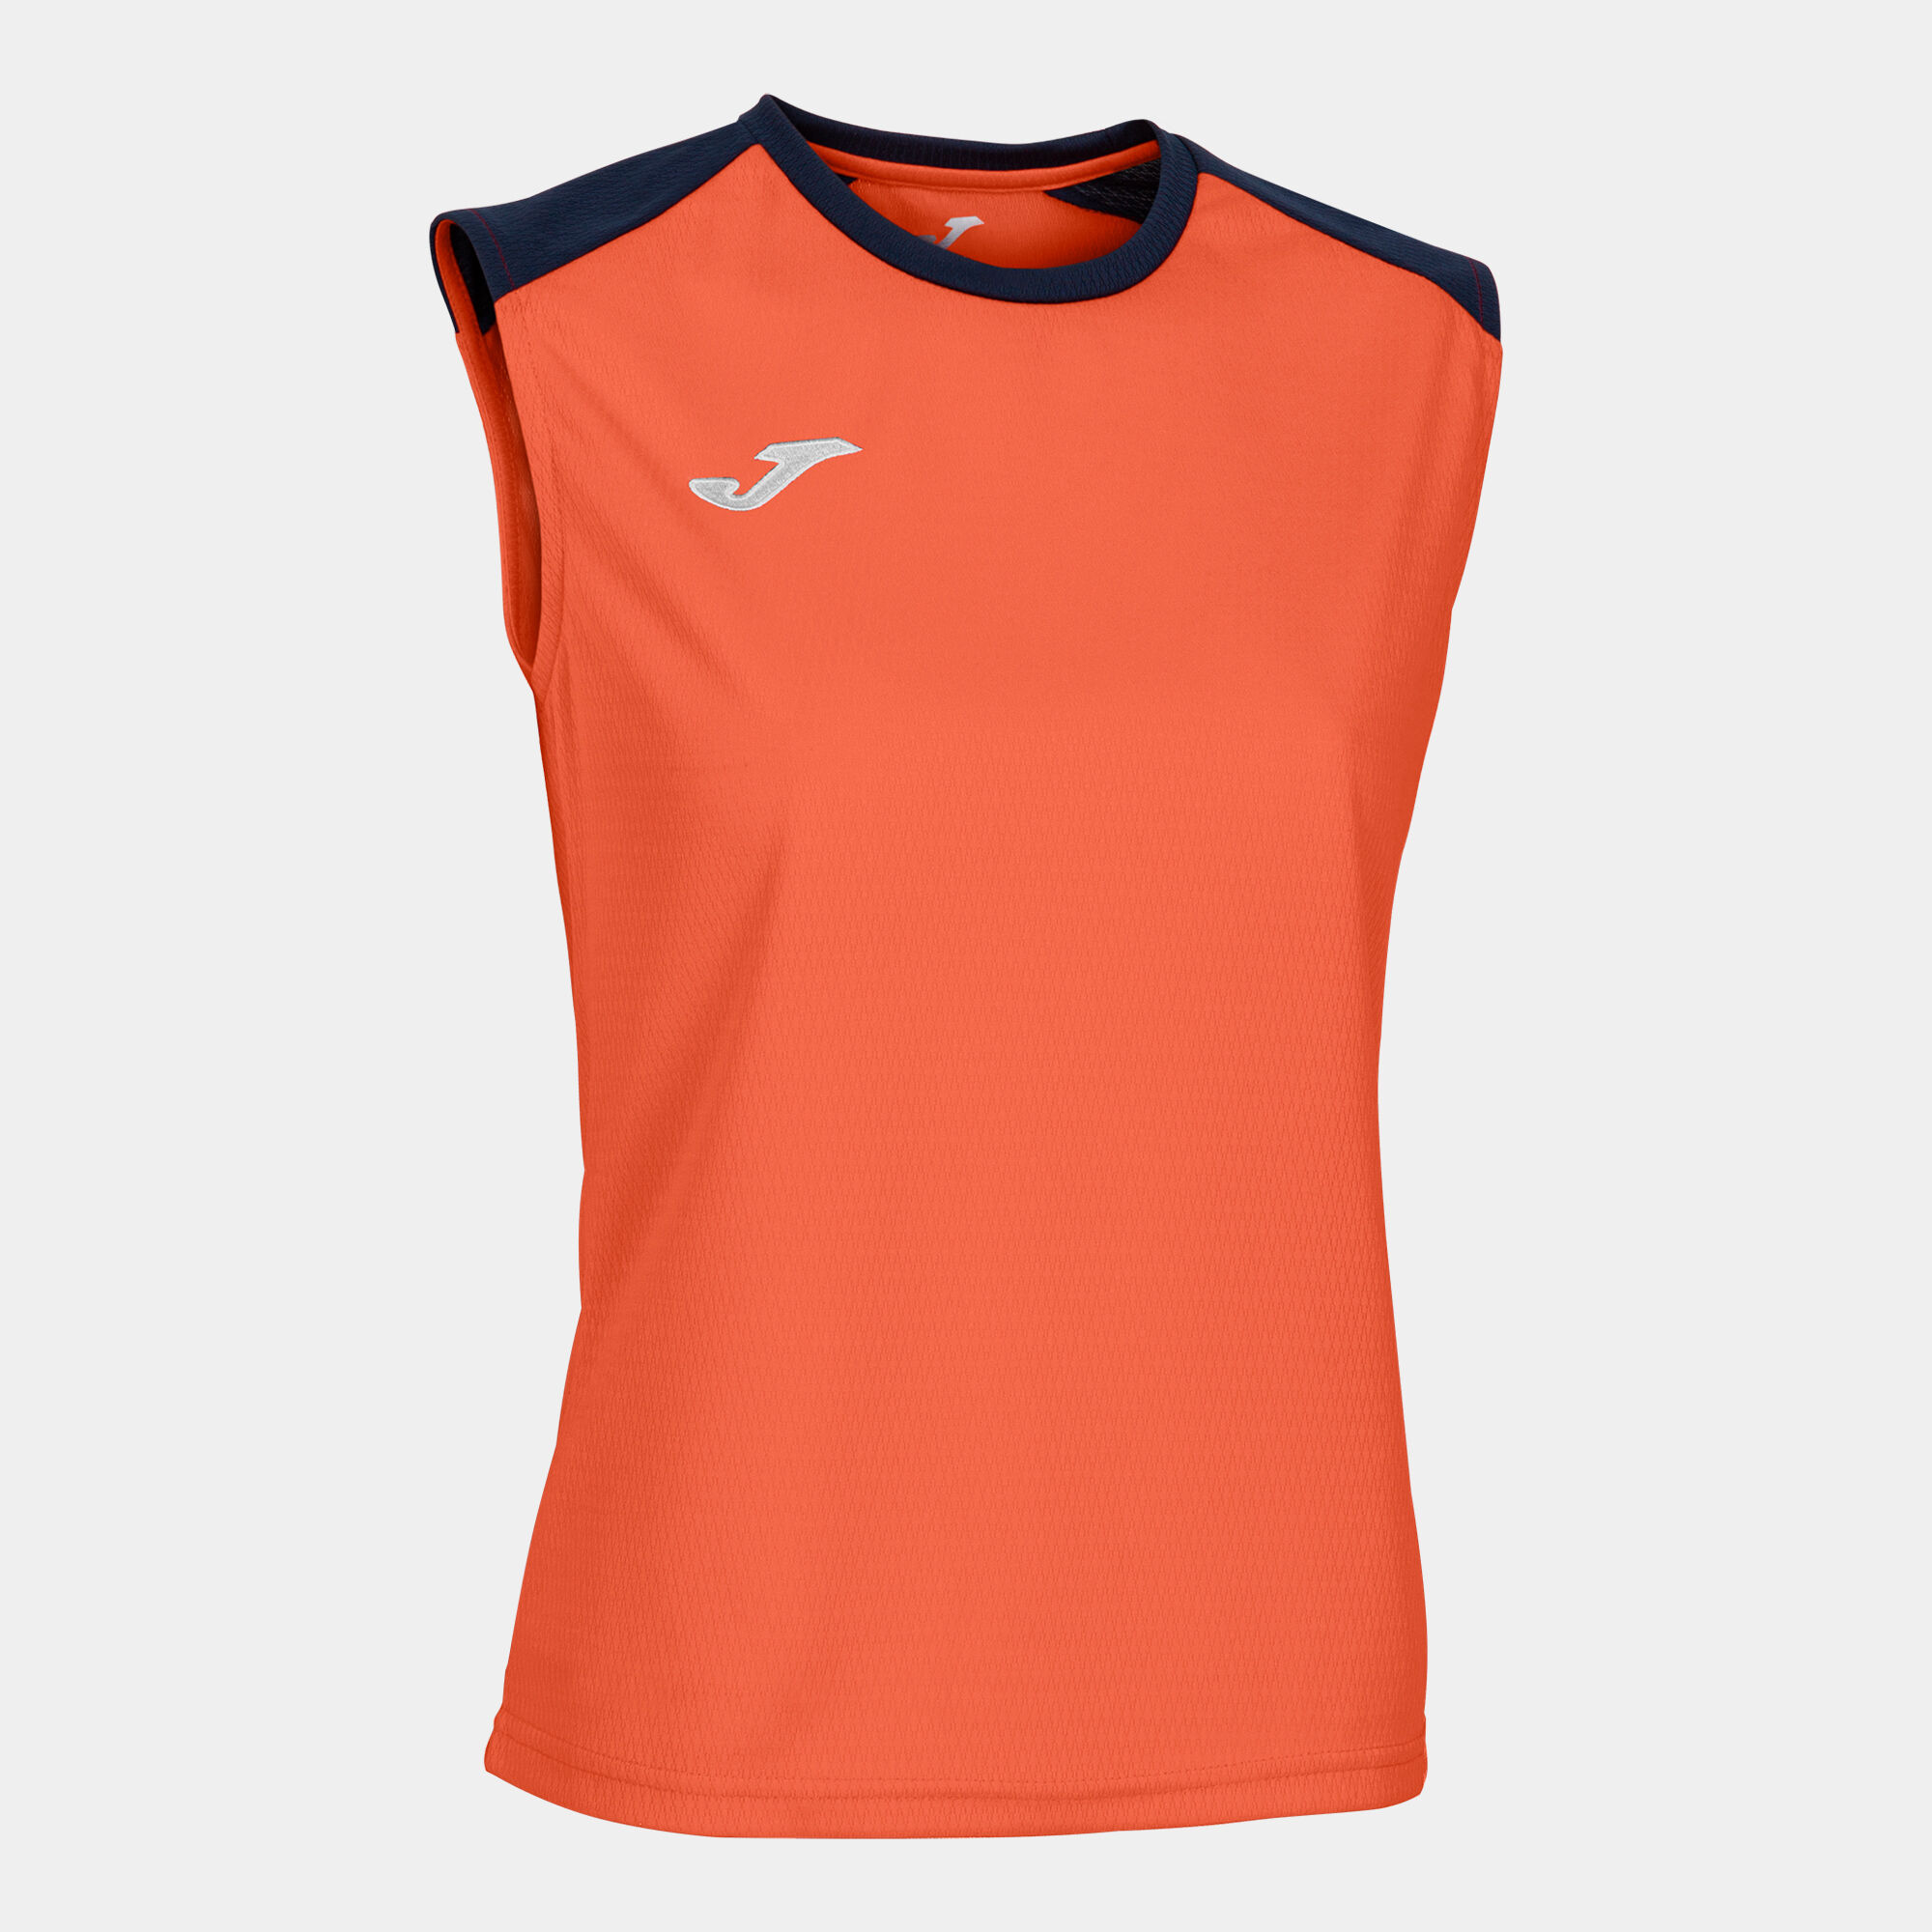 T-shirt de alça mulher Eco Championship laranja fluorescente azul marinho